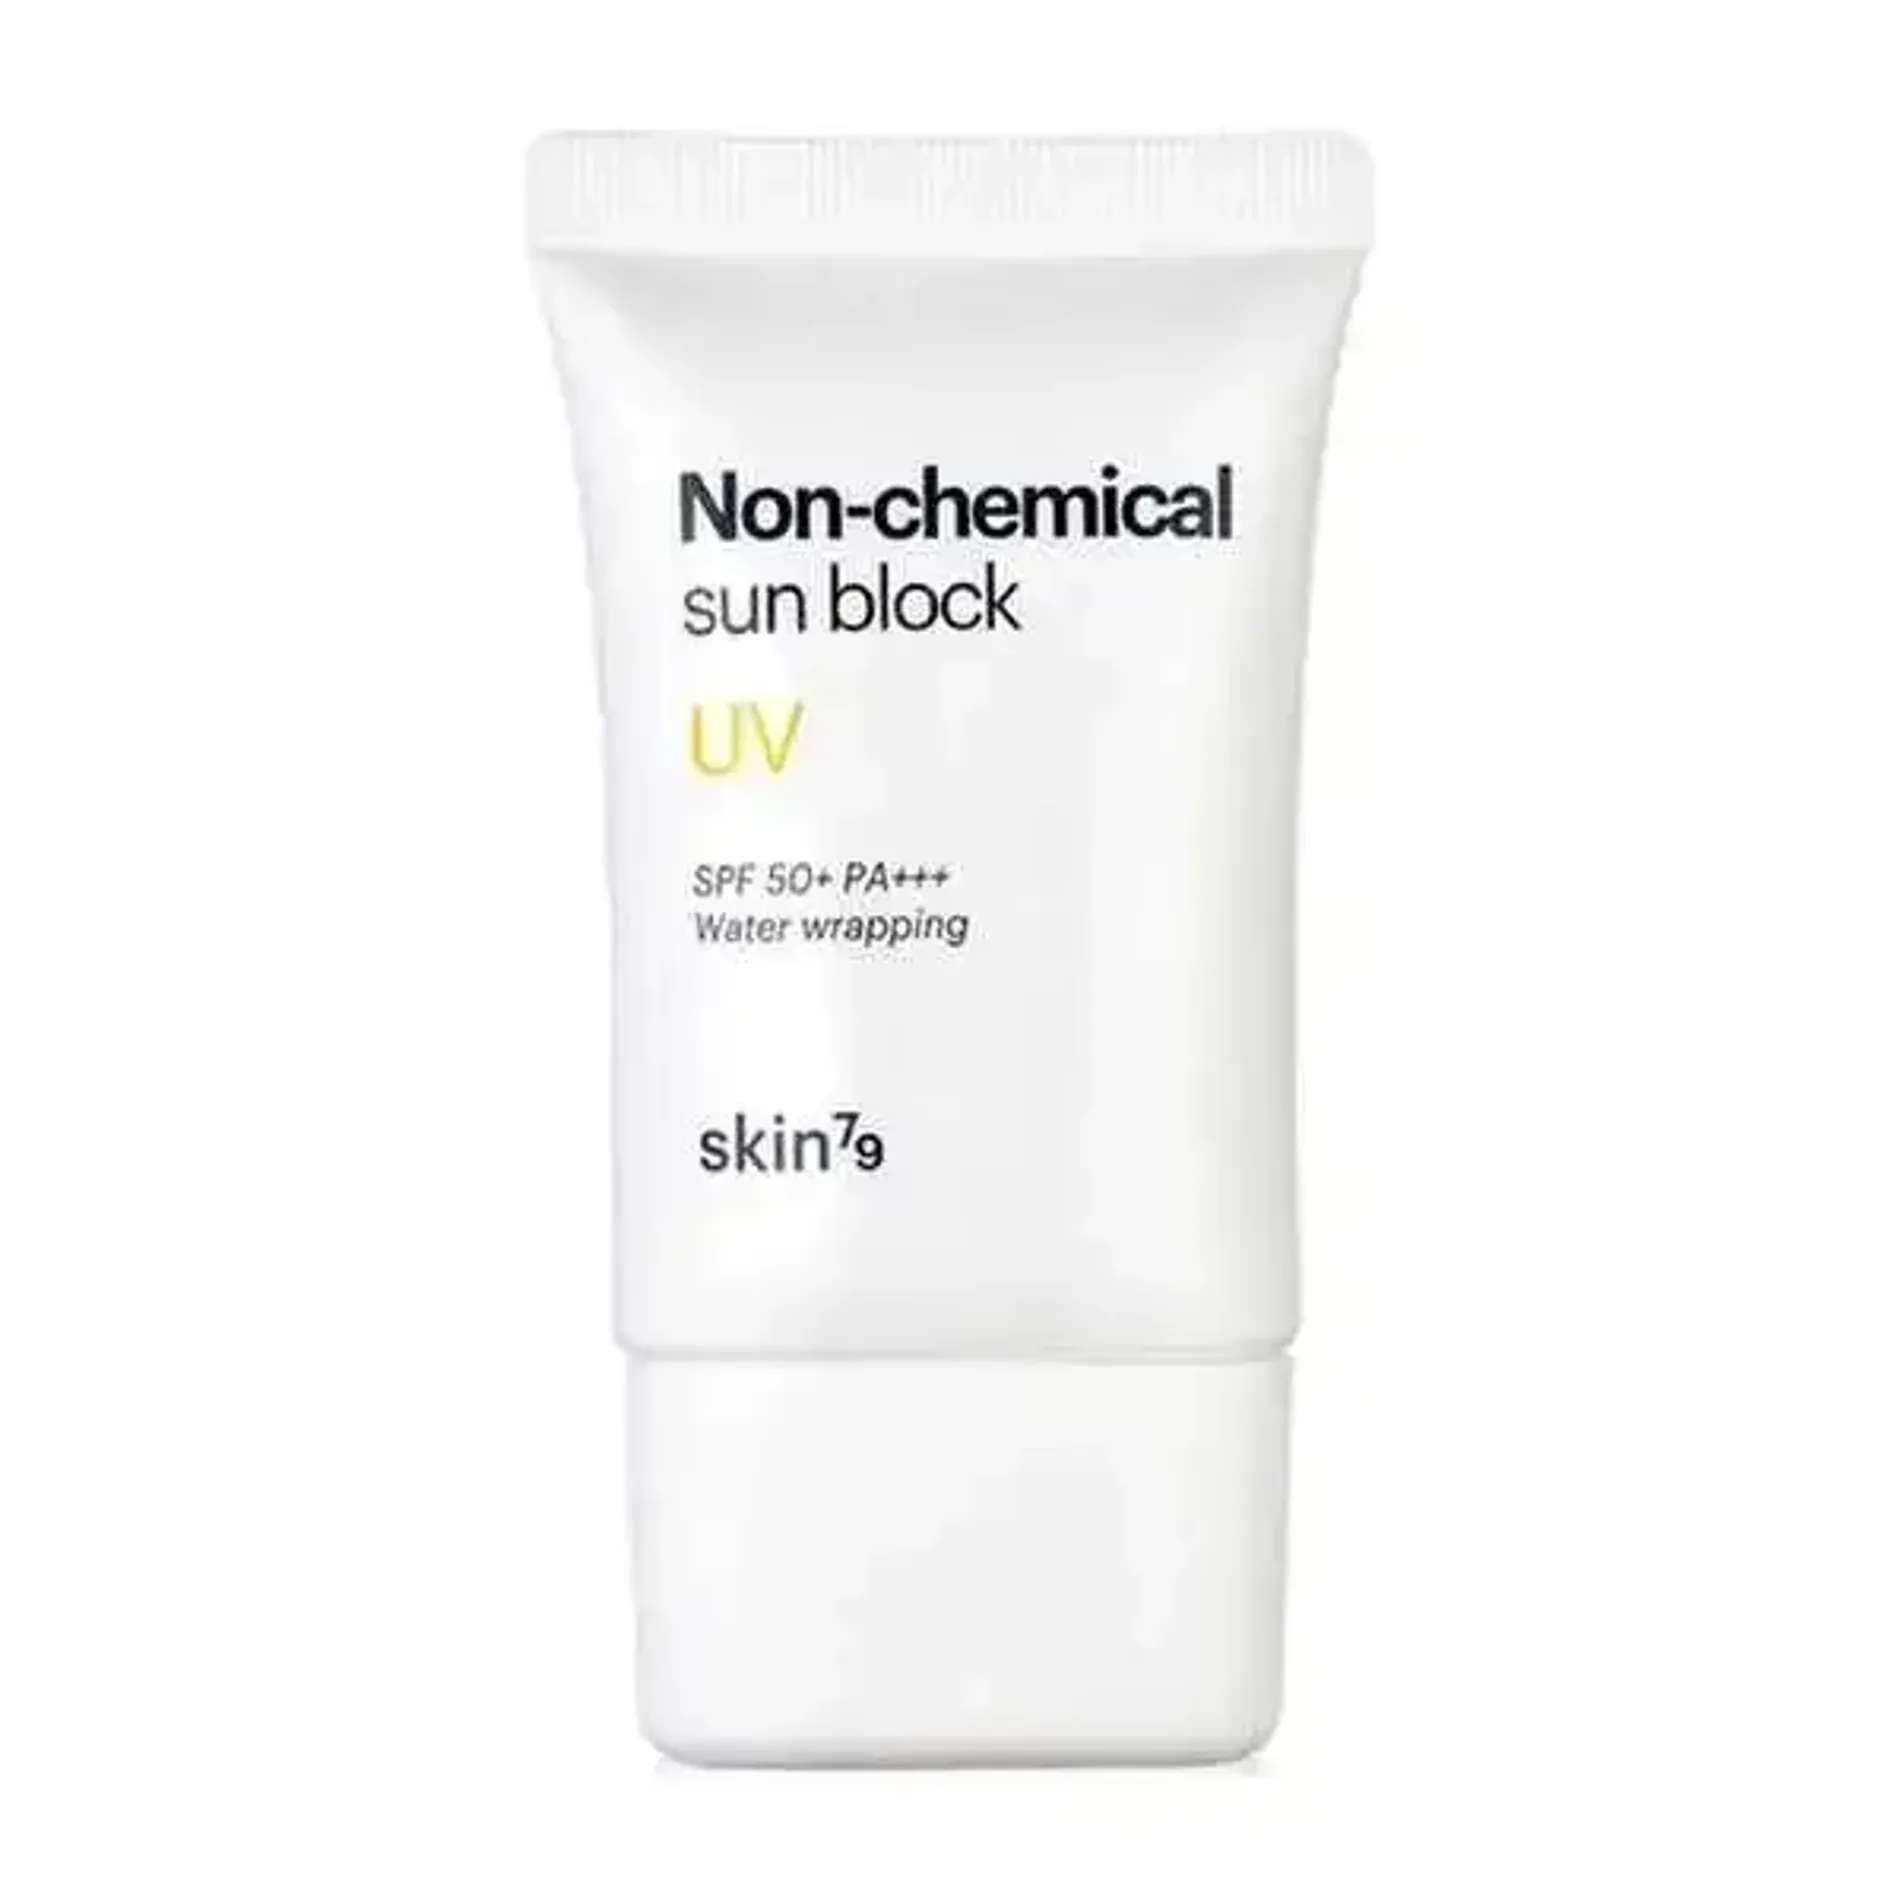 kem-chong-nang-skin79-water-wrapping-non-chemical-sun-block-1